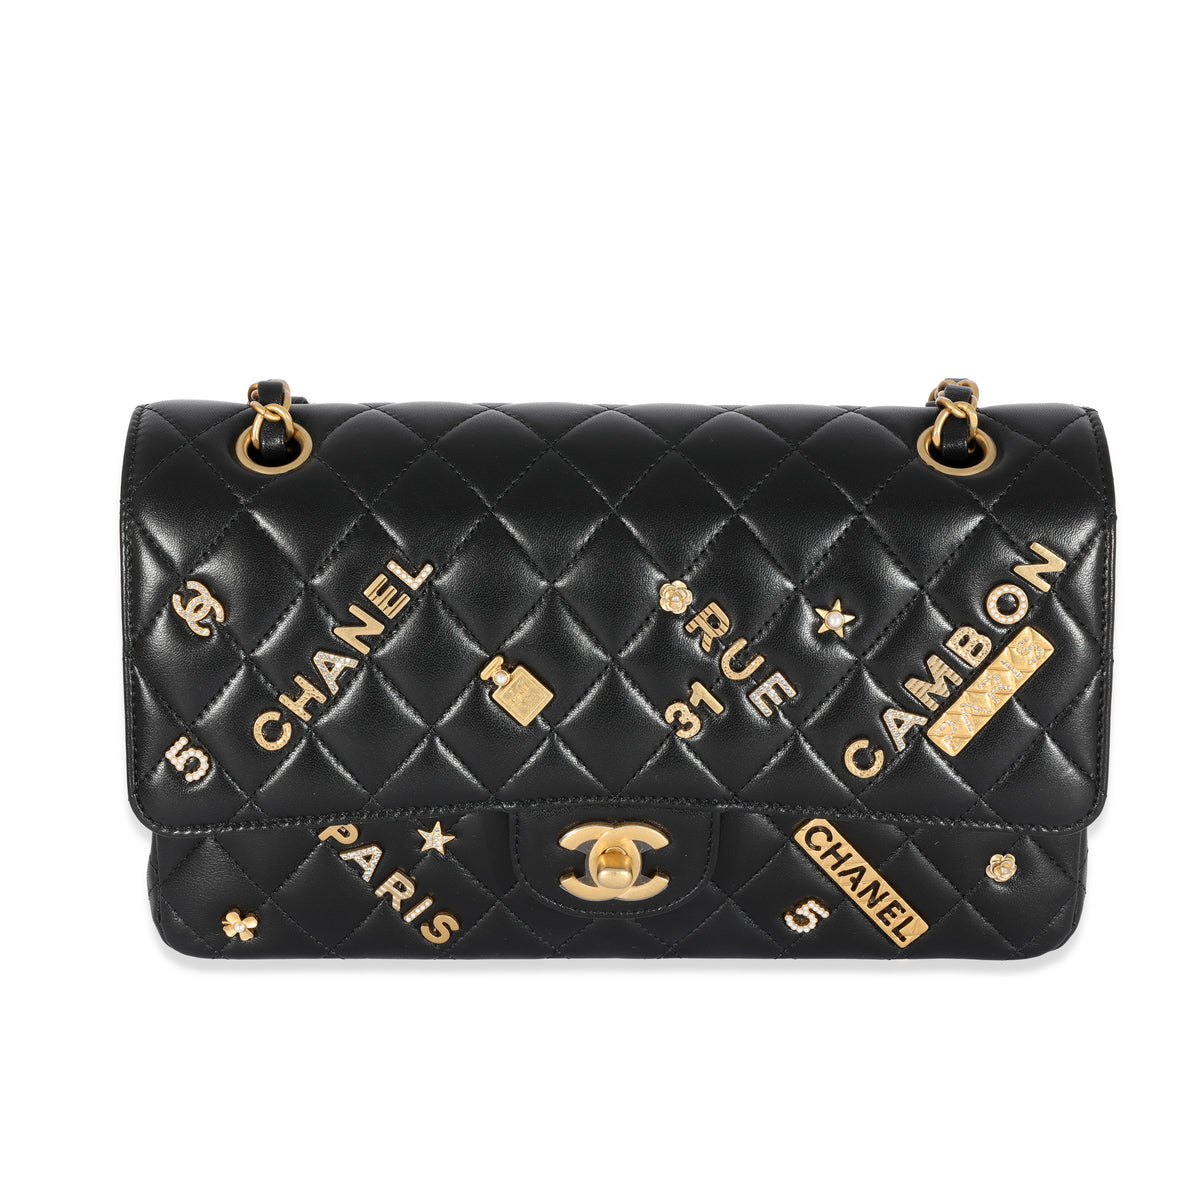 Chanel 21S Black Leather Charms Medium Flap Bag